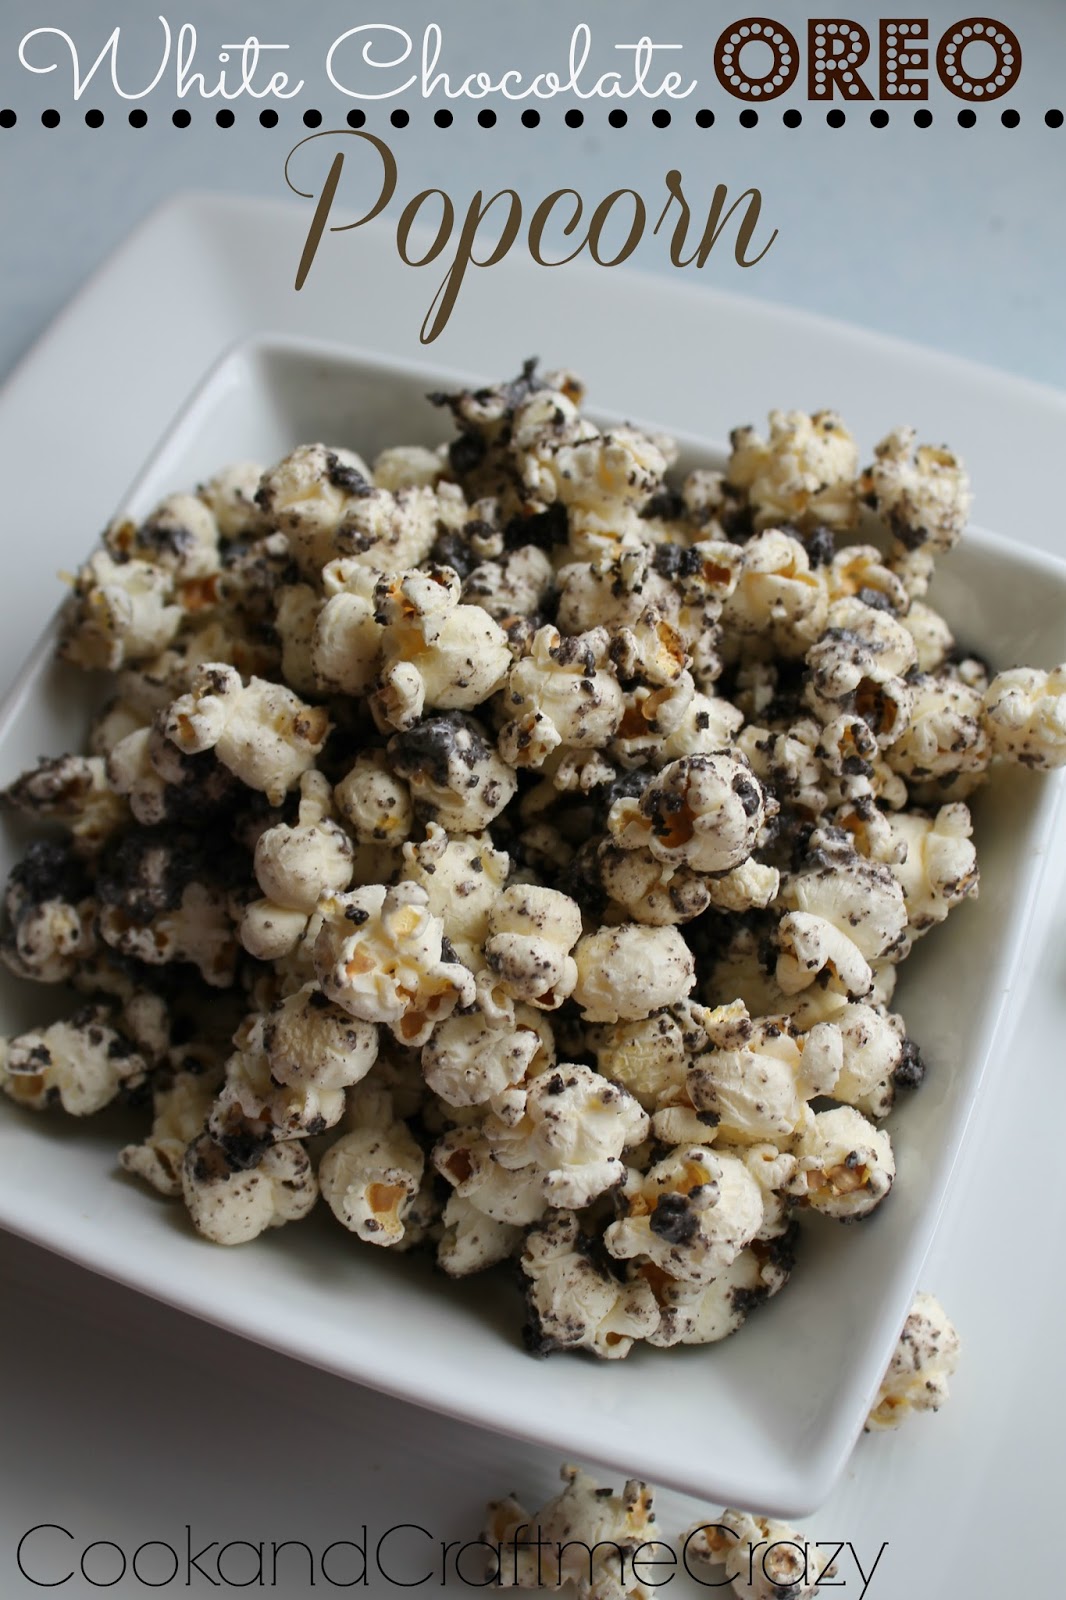 Cook and Craft Me Crazy: White Chocolate Oreo Popcorn